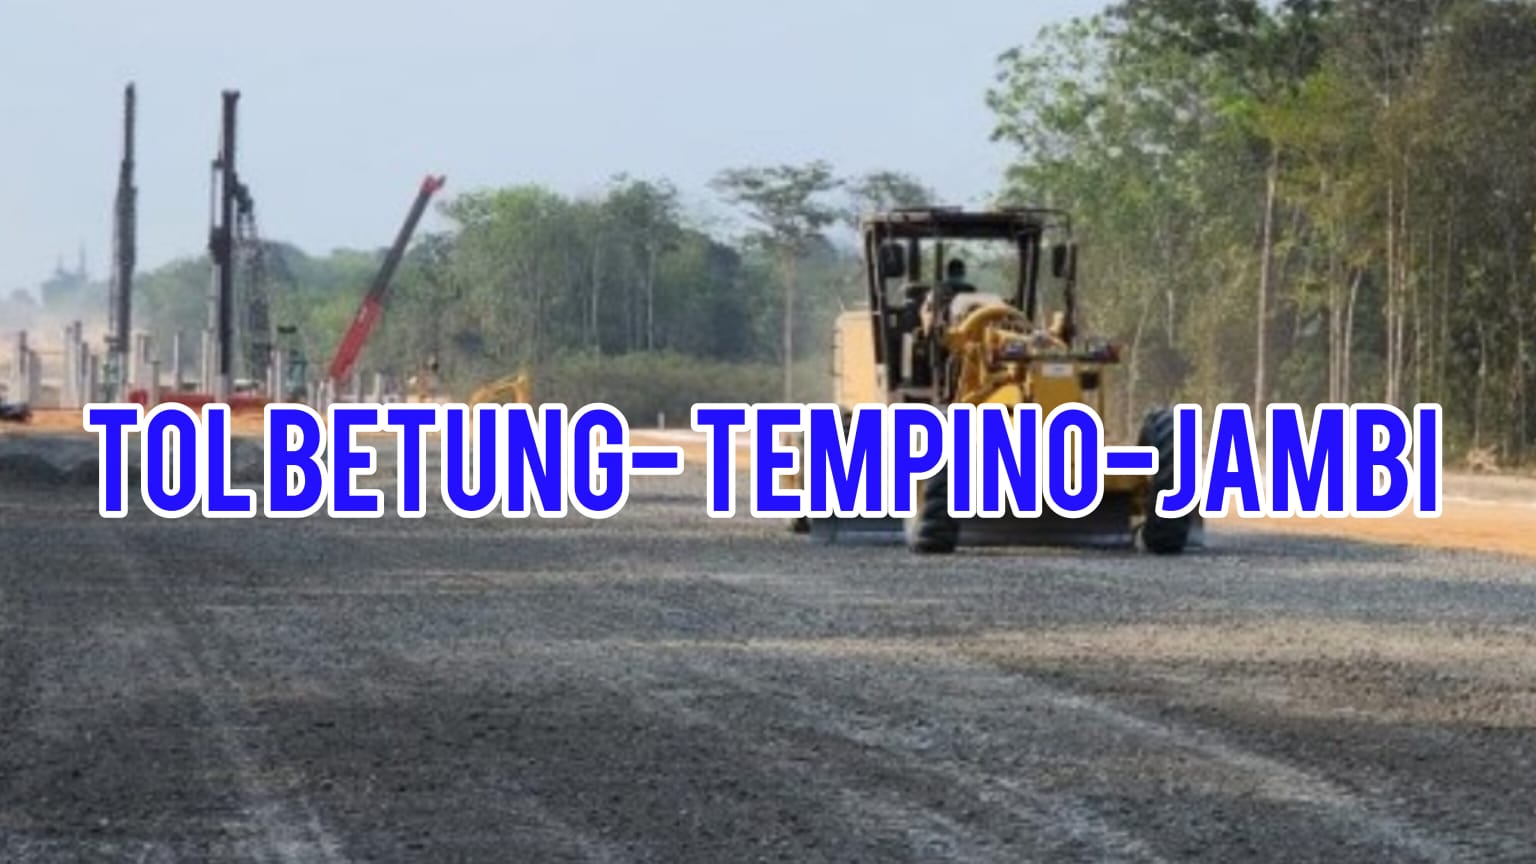 Tol Betung- Tempino-Jambi Hubungkan 3 Provinsi, Berikut Progres Penyelesaiannya 